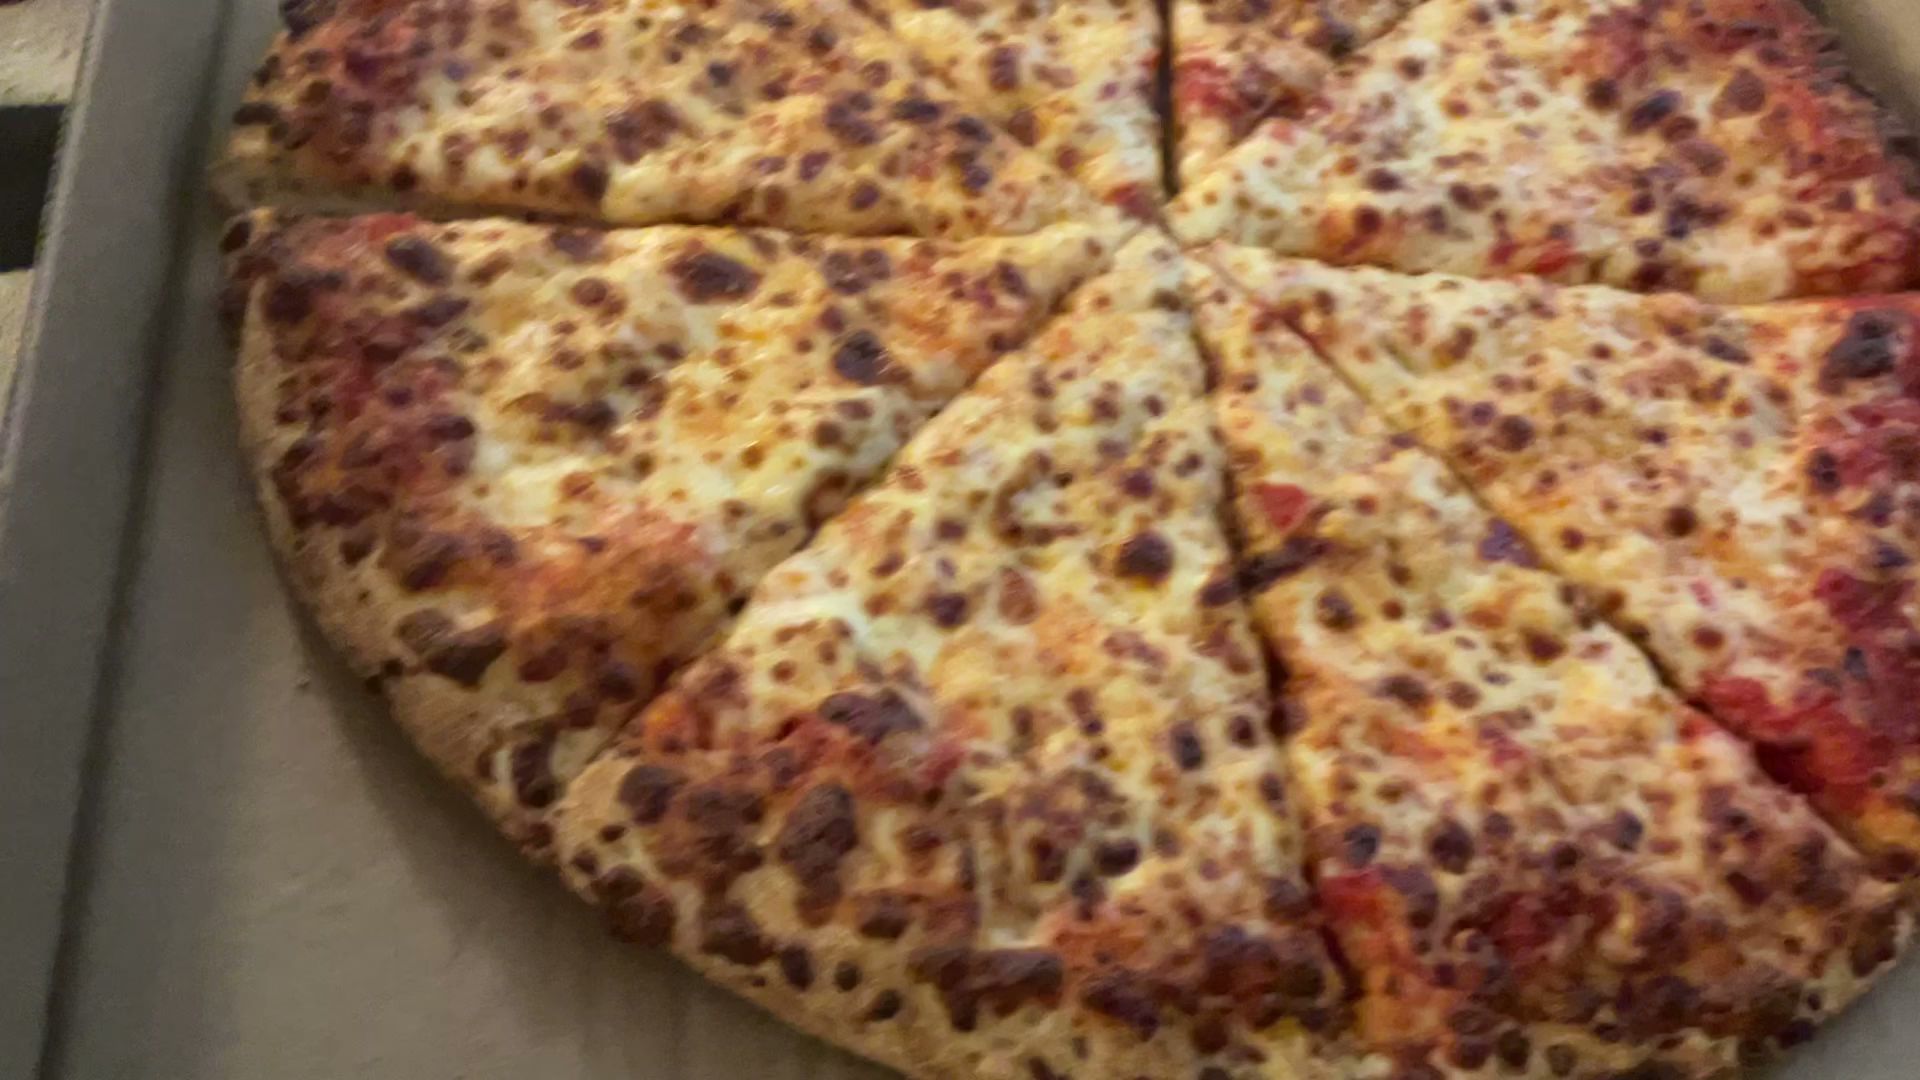 Mario’s Pizza